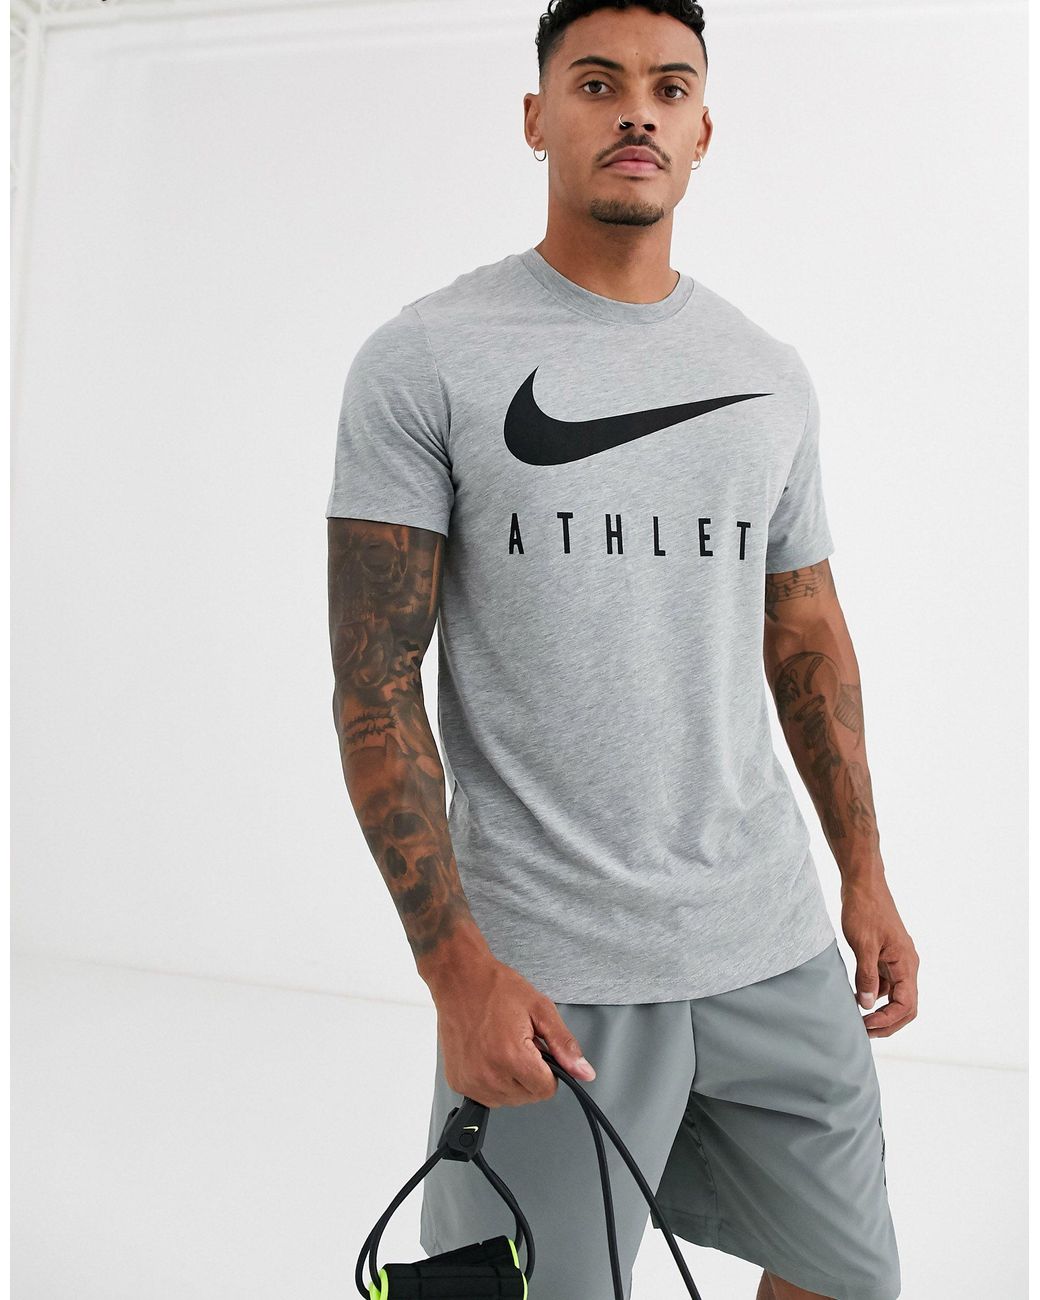 Nike Athlete T-shirt in Grey for Men | Lyst UK